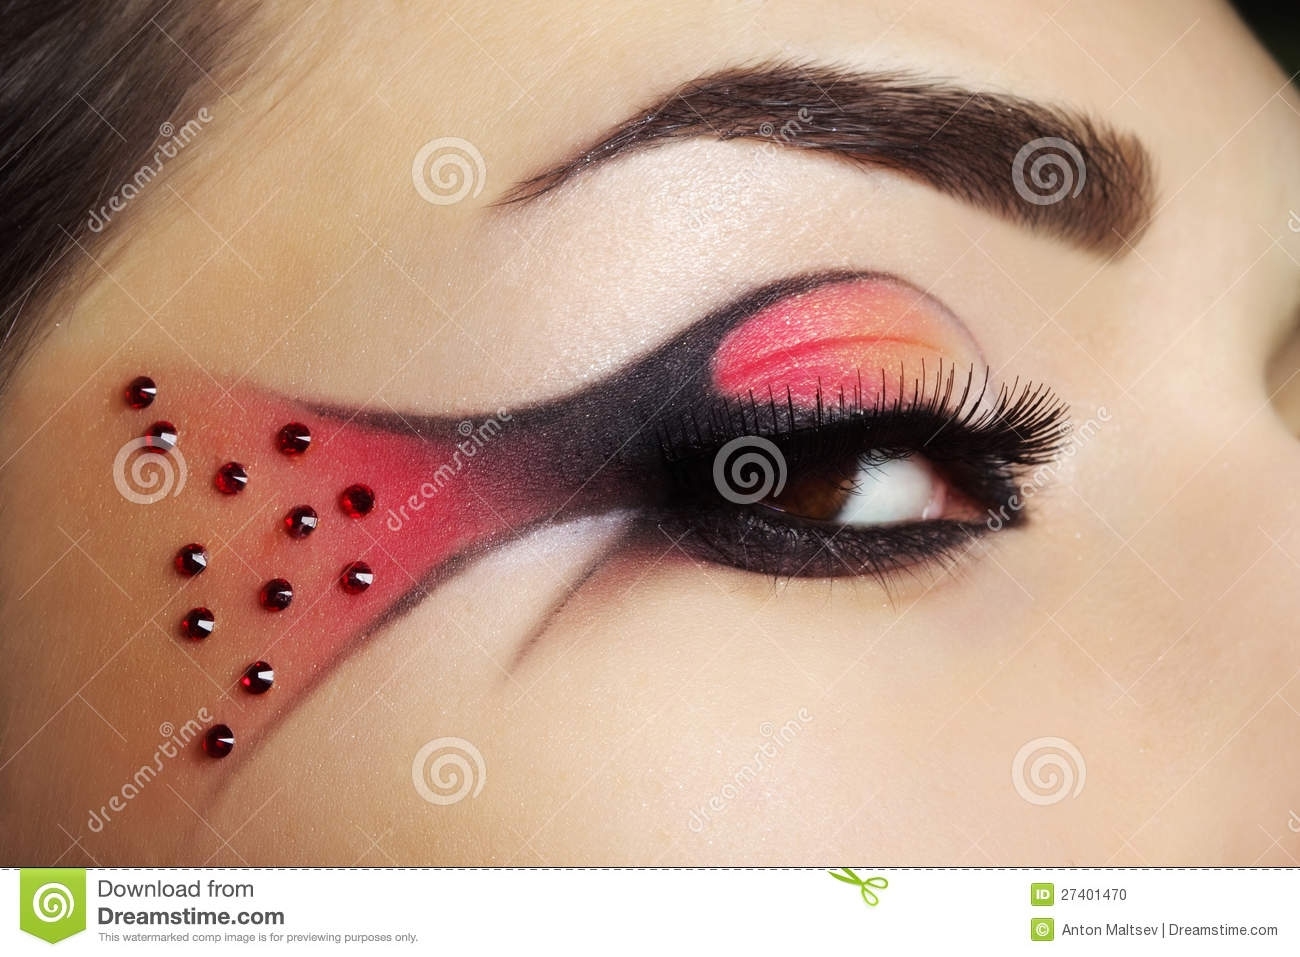 Creative Eye Make-Up Stock Photo. Image Of Eyebrow, Shadows - 27401470 in Download Eye Makeup Images